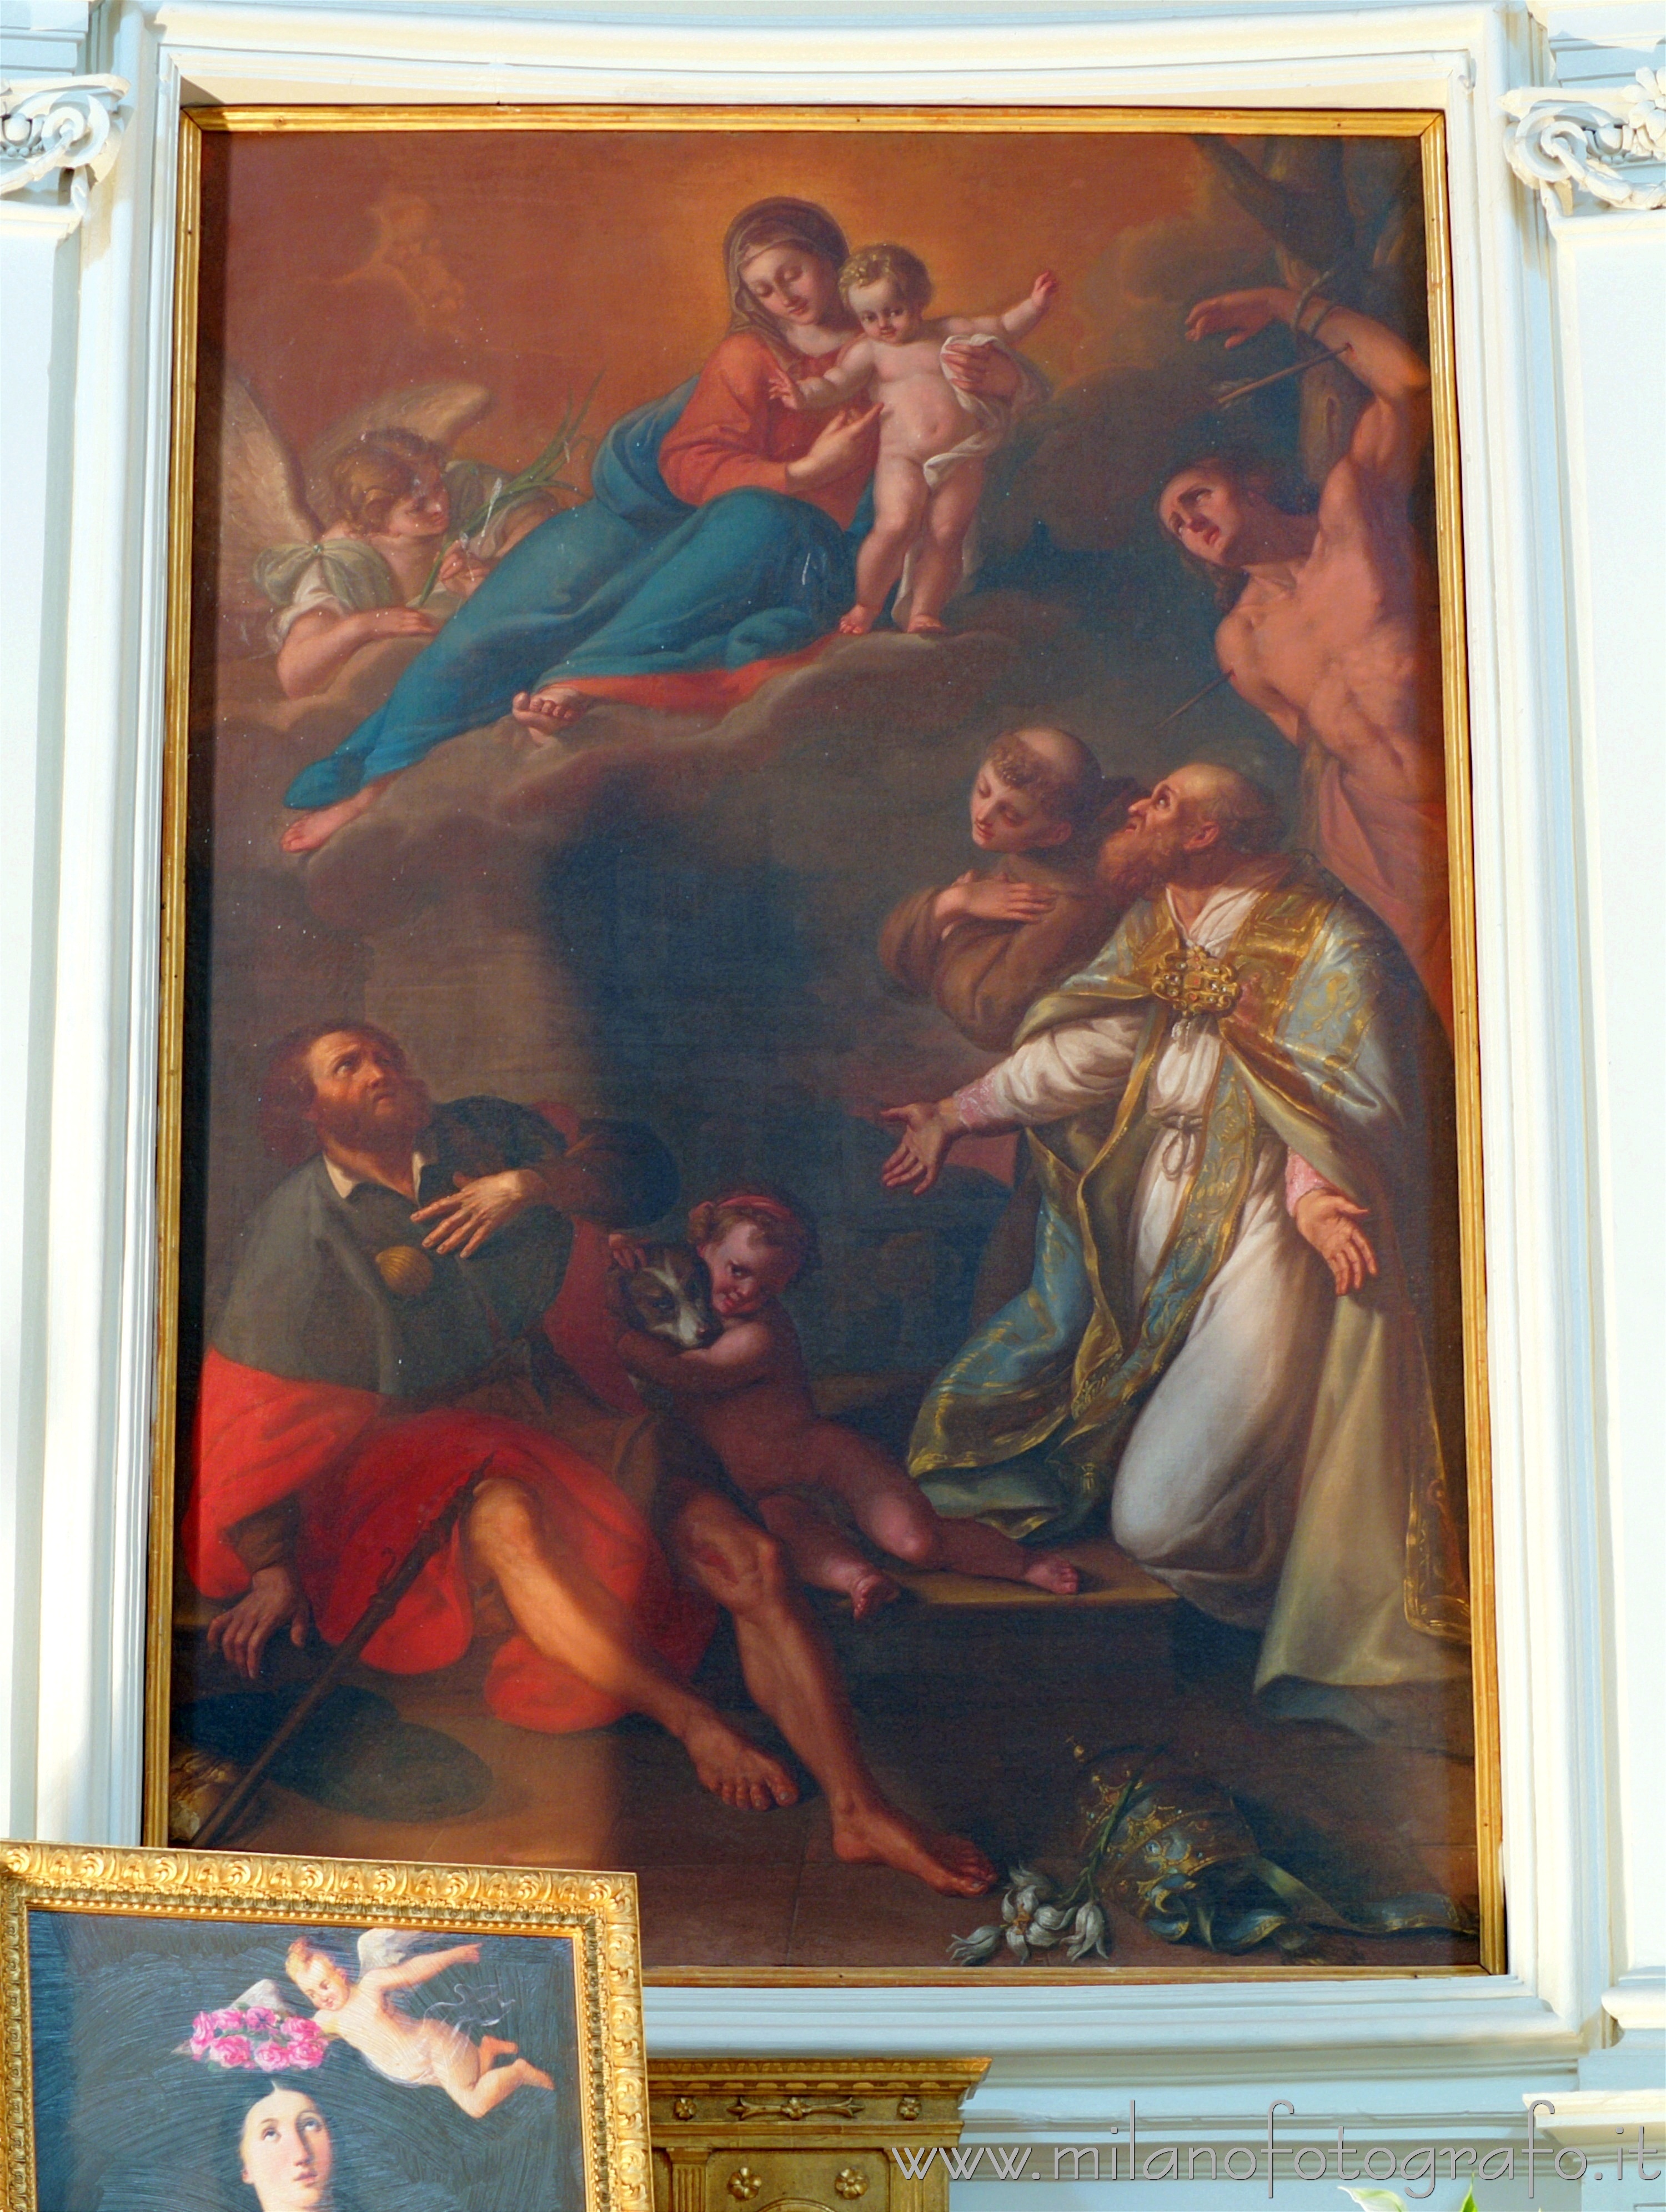 San Giovanni in Marignano (Rimini, Italy): Madonna with Child and Saints by Giuseppe Soleri Brancaleoni in the Church of Santa Lucia - San Giovanni in Marignano (Rimini, Italy)